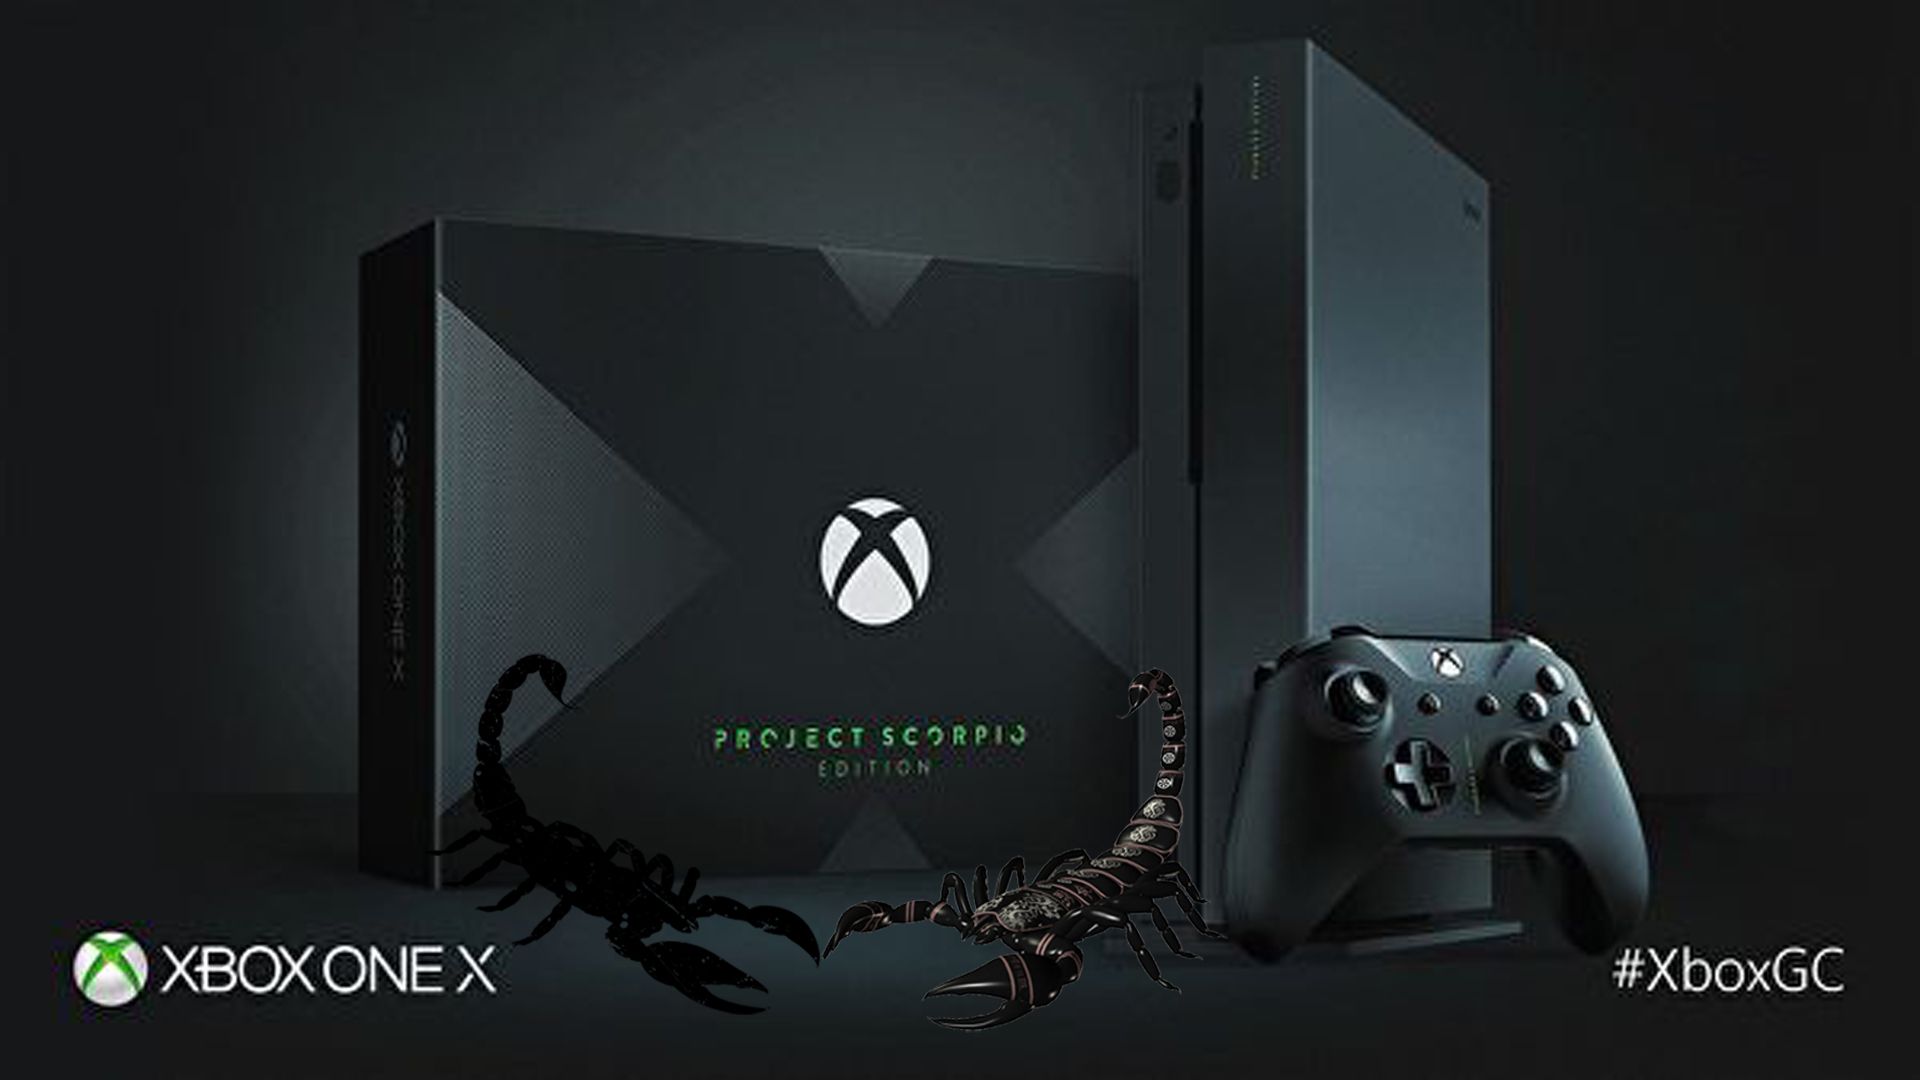 Xbox One X: Scorpio Edition Unveiled, Will Include Live Scorpions